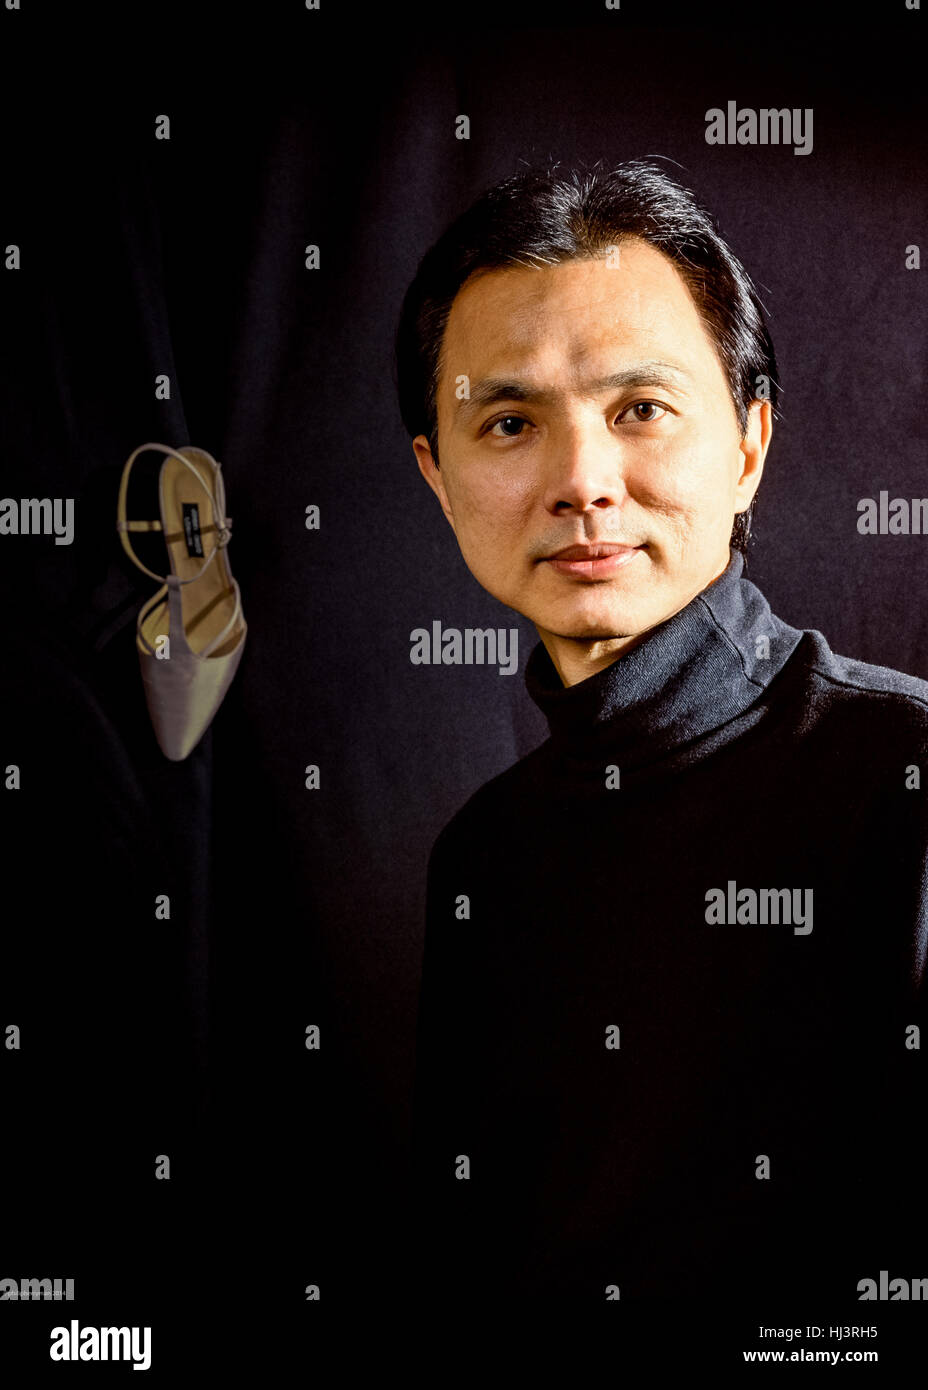 Jimmy Choo Fashion Designer His Daughter Stock Photo 8759521